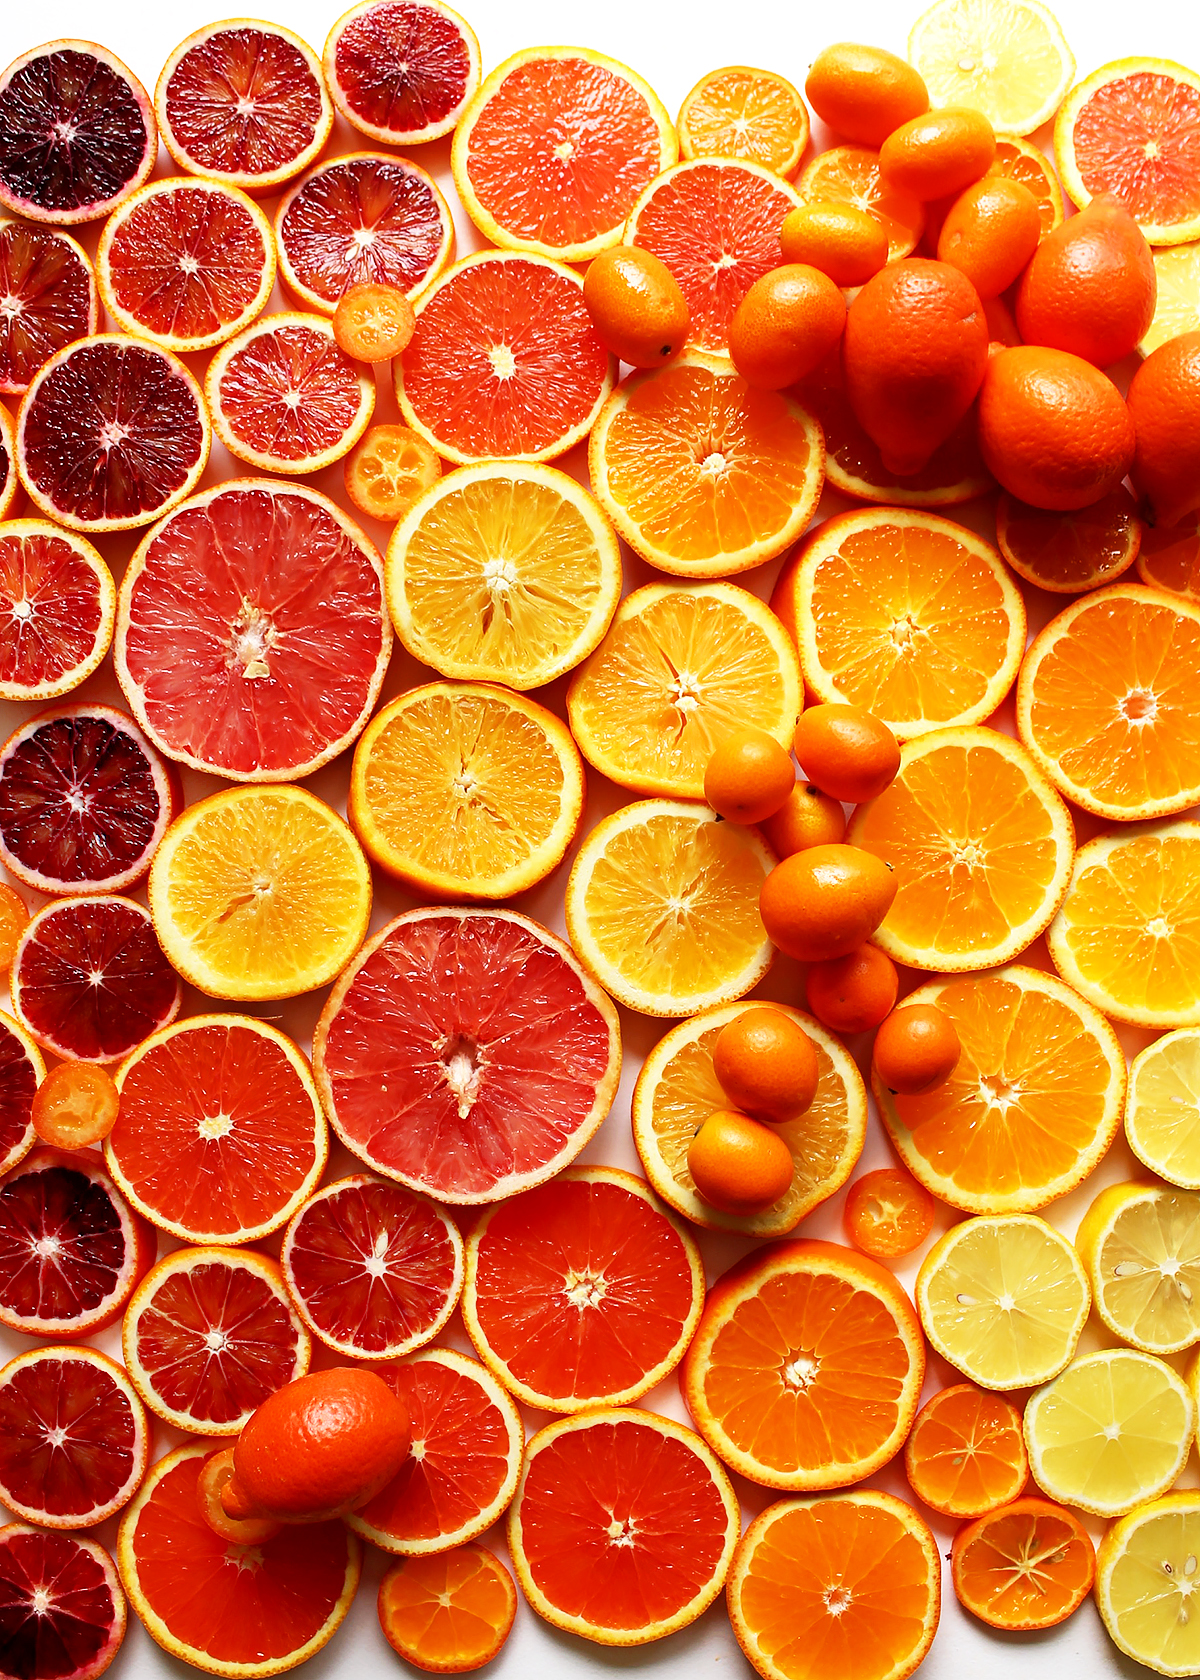 sliced citrus varieties: cara cara, navel, valnecia, blood oranges, kumquats